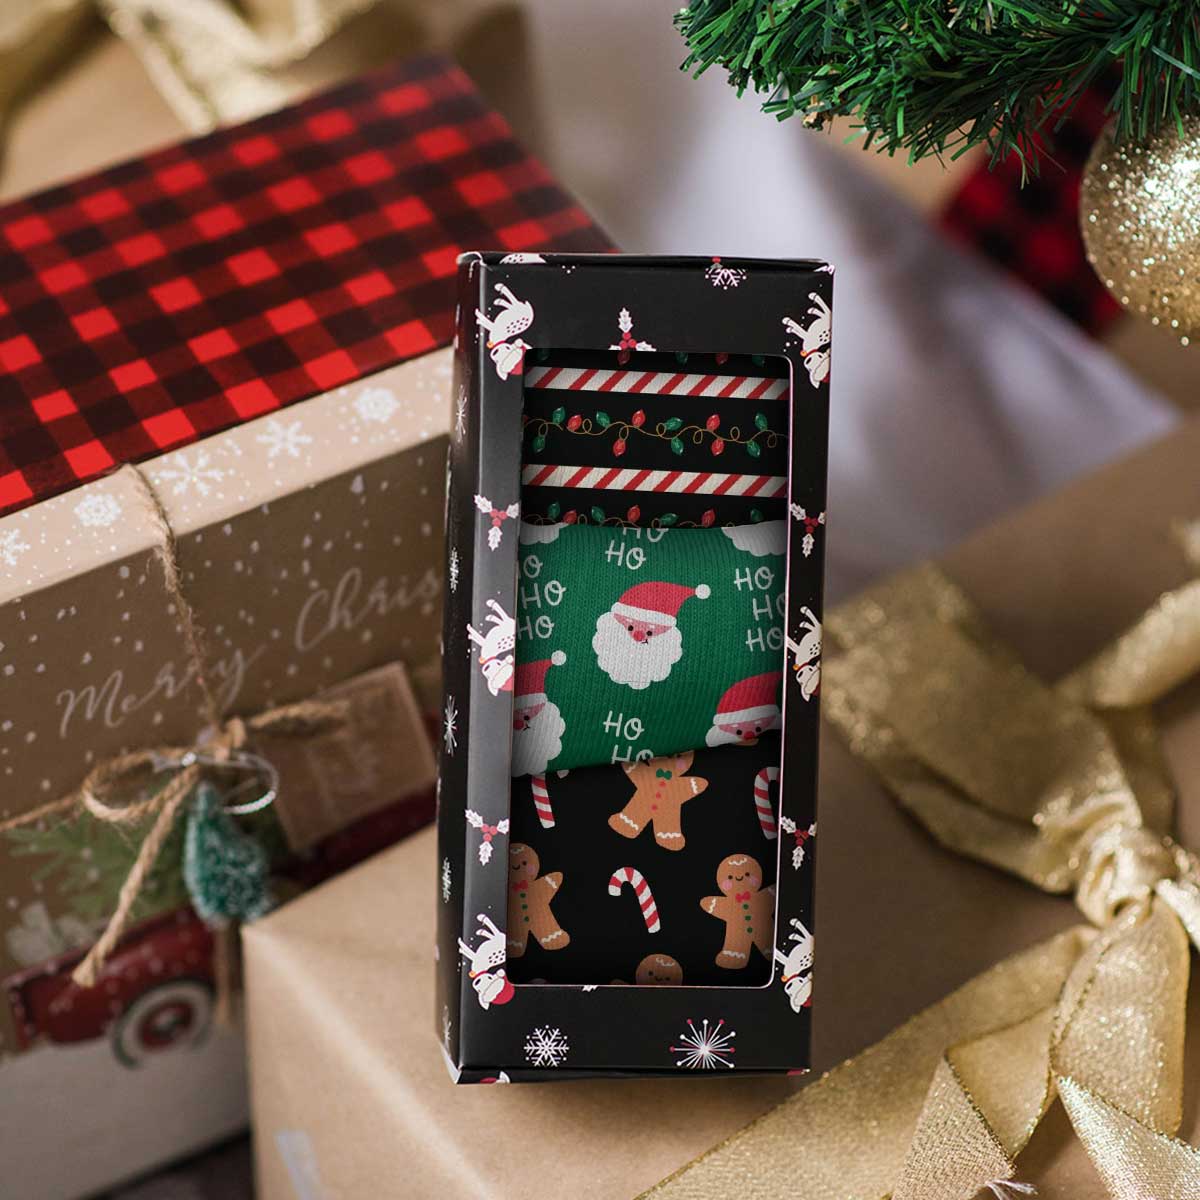 Candy Cane, Gingerbread Man & Santa | Holiday 3 - Pack Gift Sets | Quarter Crew Bamboo Socks